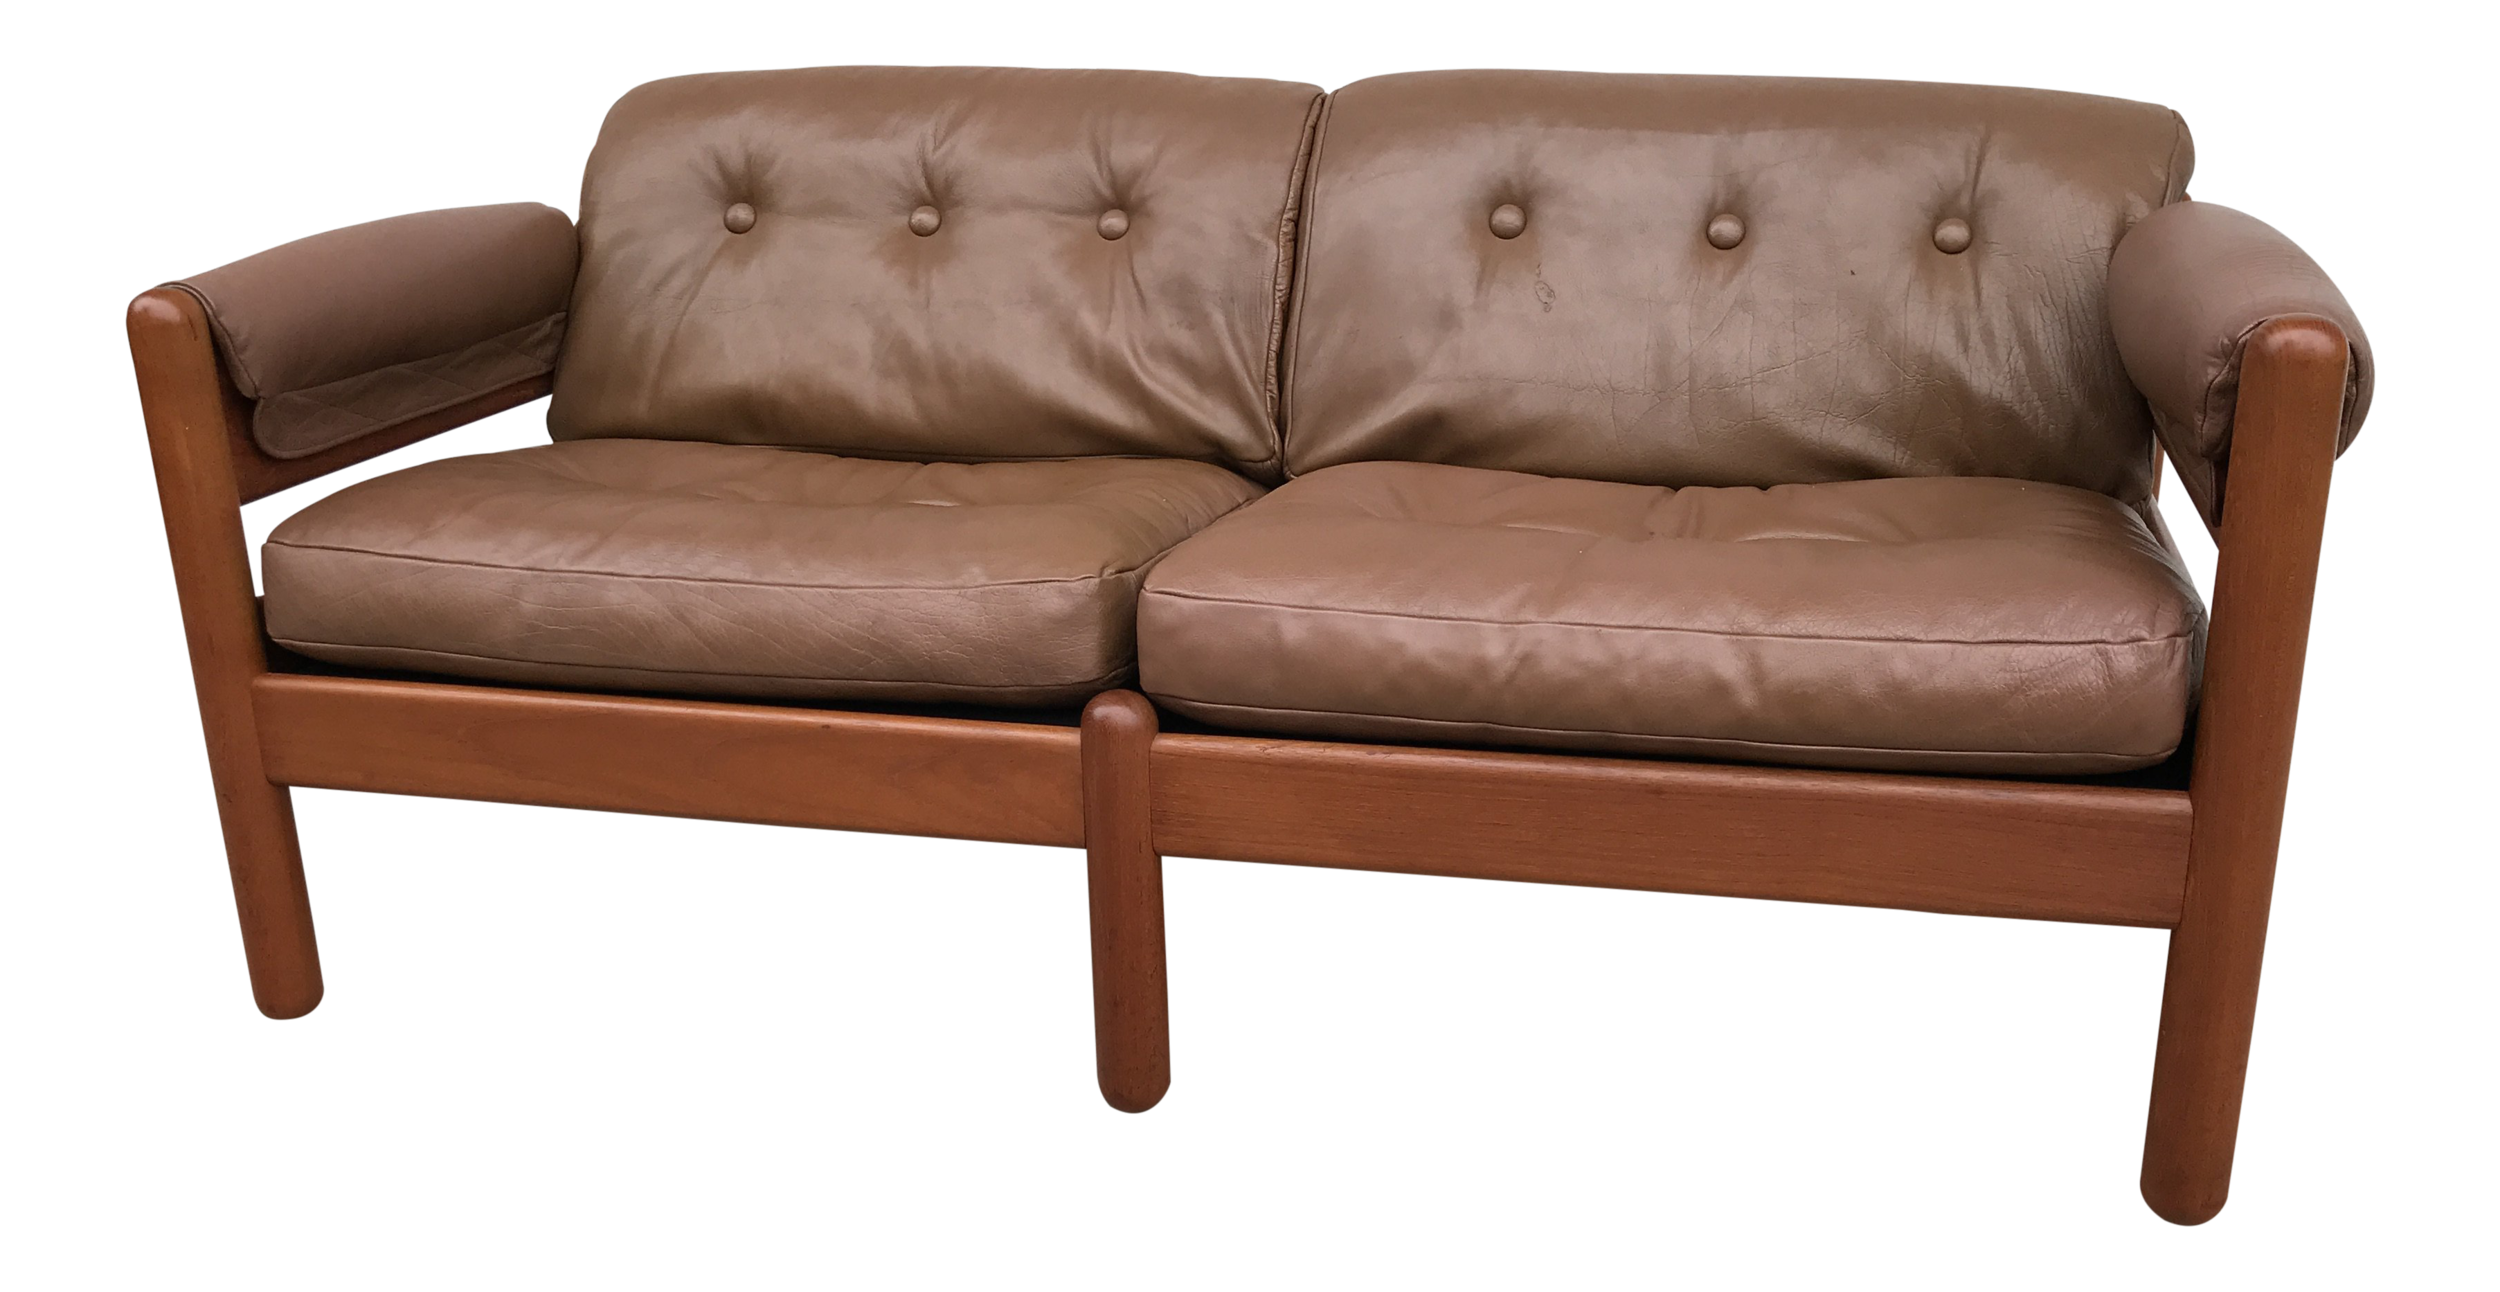 1960s-danish-modern-makael-laursen-teak-and-leather-sofa-9095.png